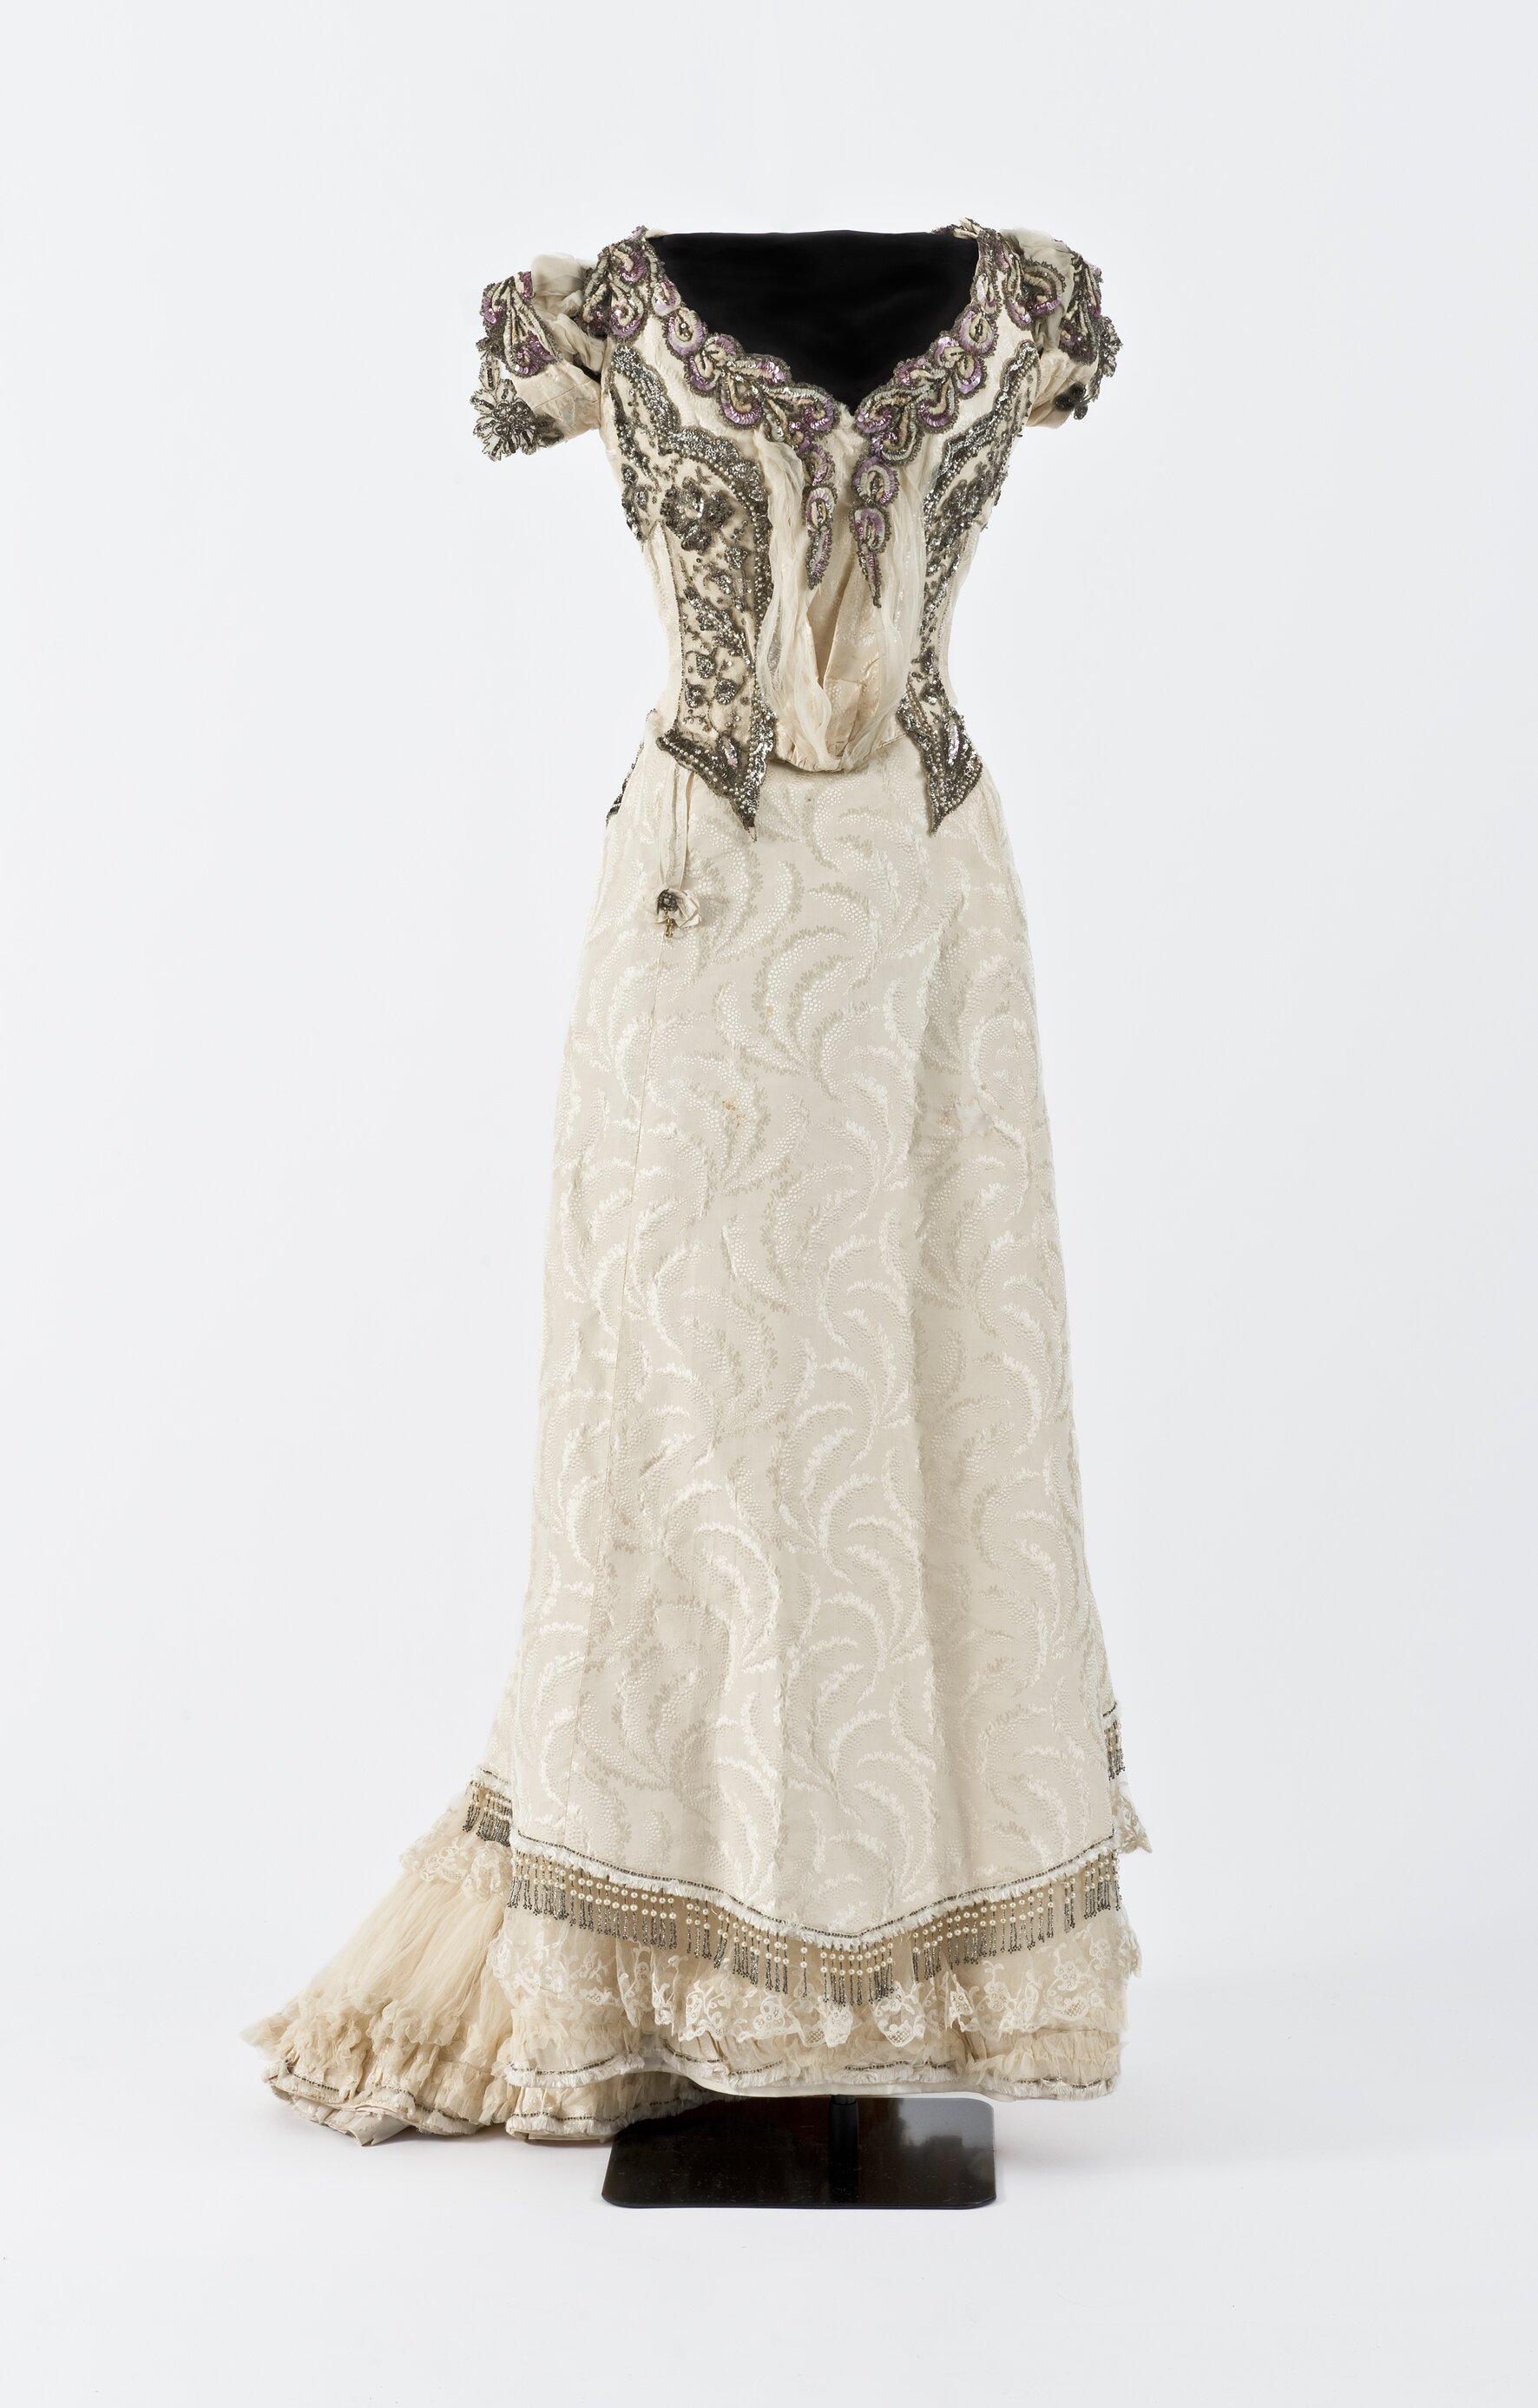 Ladies_Ball_Dress_Scotland_1892-1901_skirt_and_Bodice